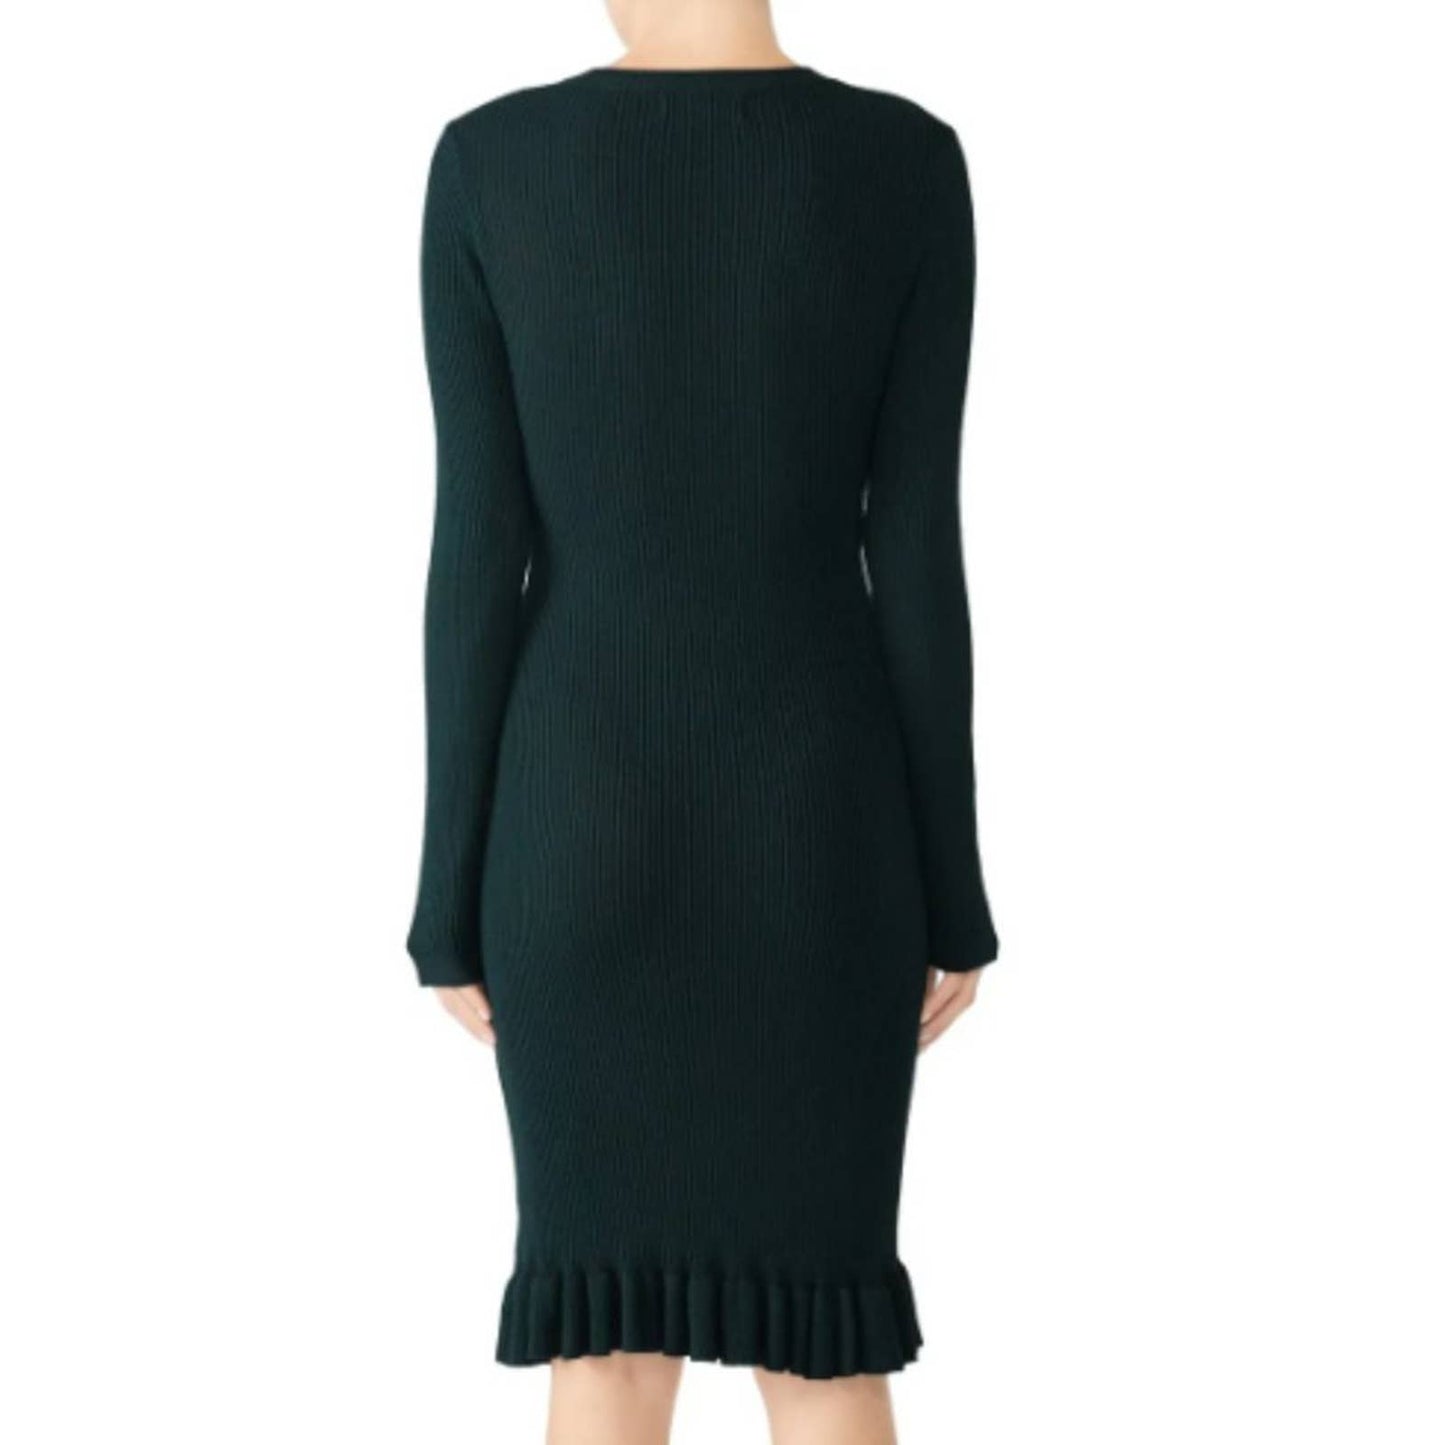 Anthropologie John + Jenn Knit Ribbed Green Sweater Dress Size Medium